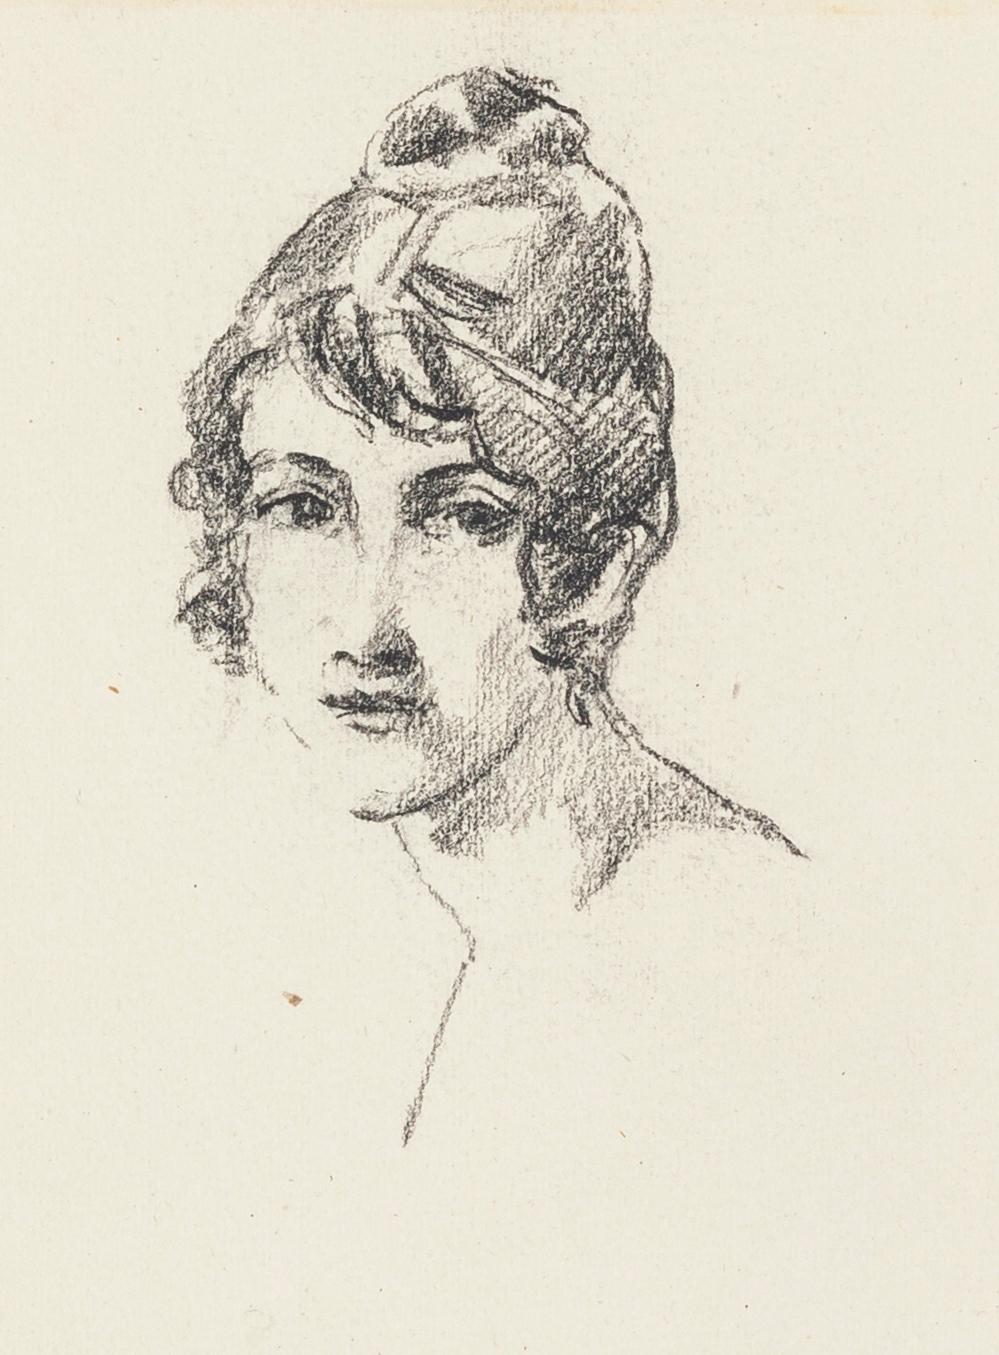 Jean Roch Collon Figurative Art - Portrait of Woman - Charcoal Drawing by J. Rochelles Collon - Early 1900